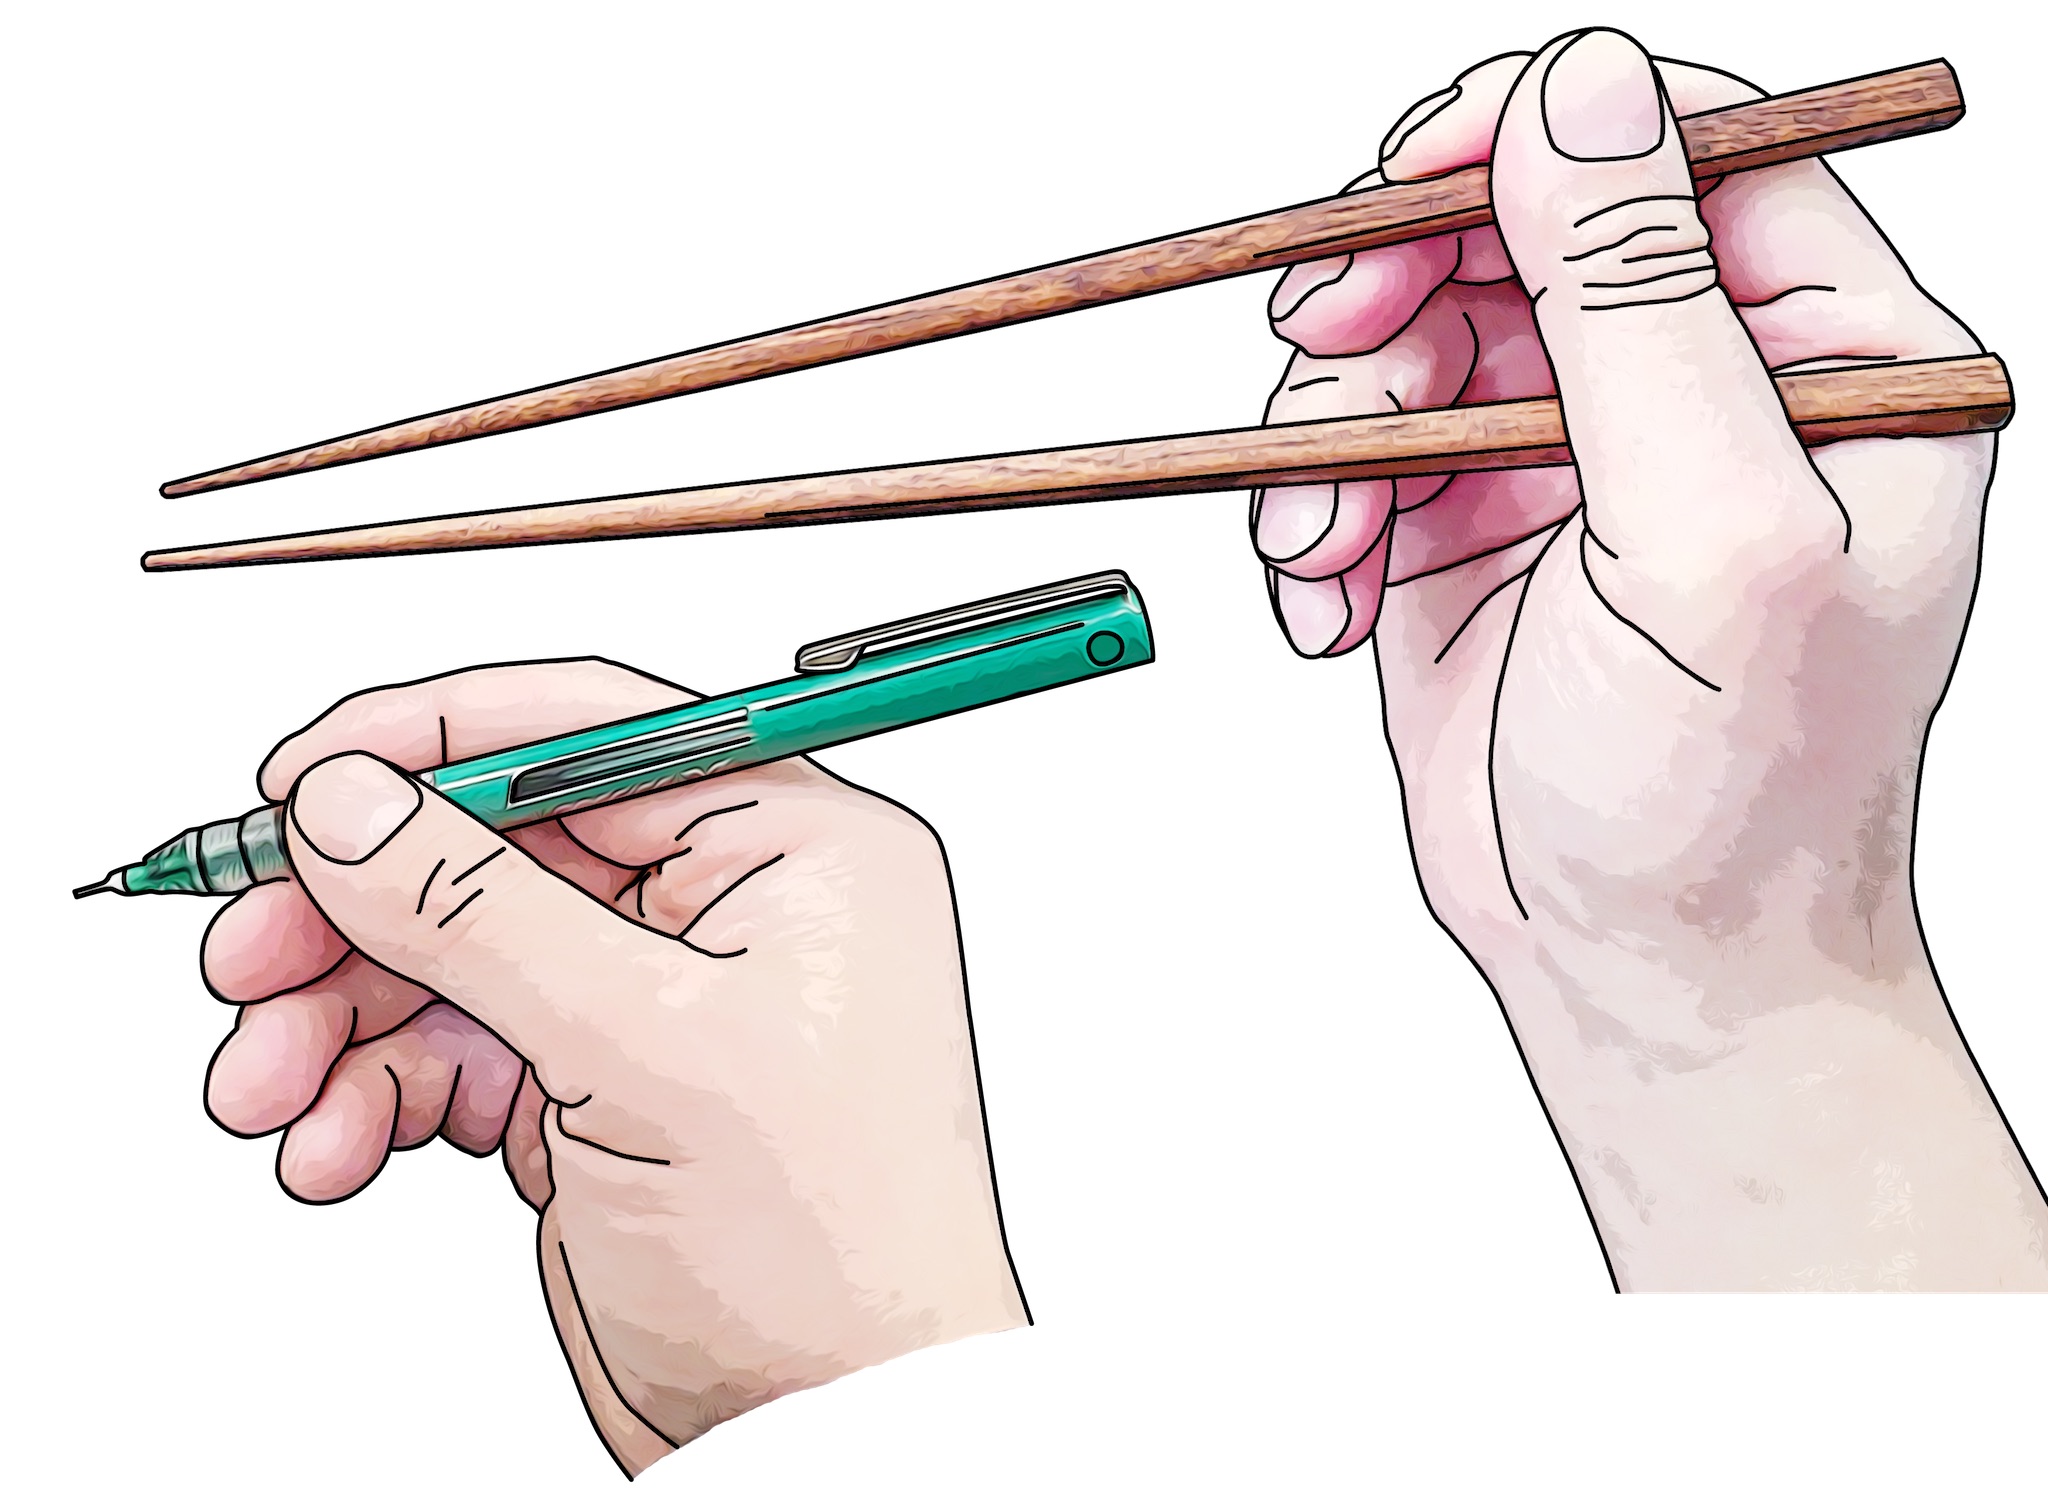 How To Use Chopsticks